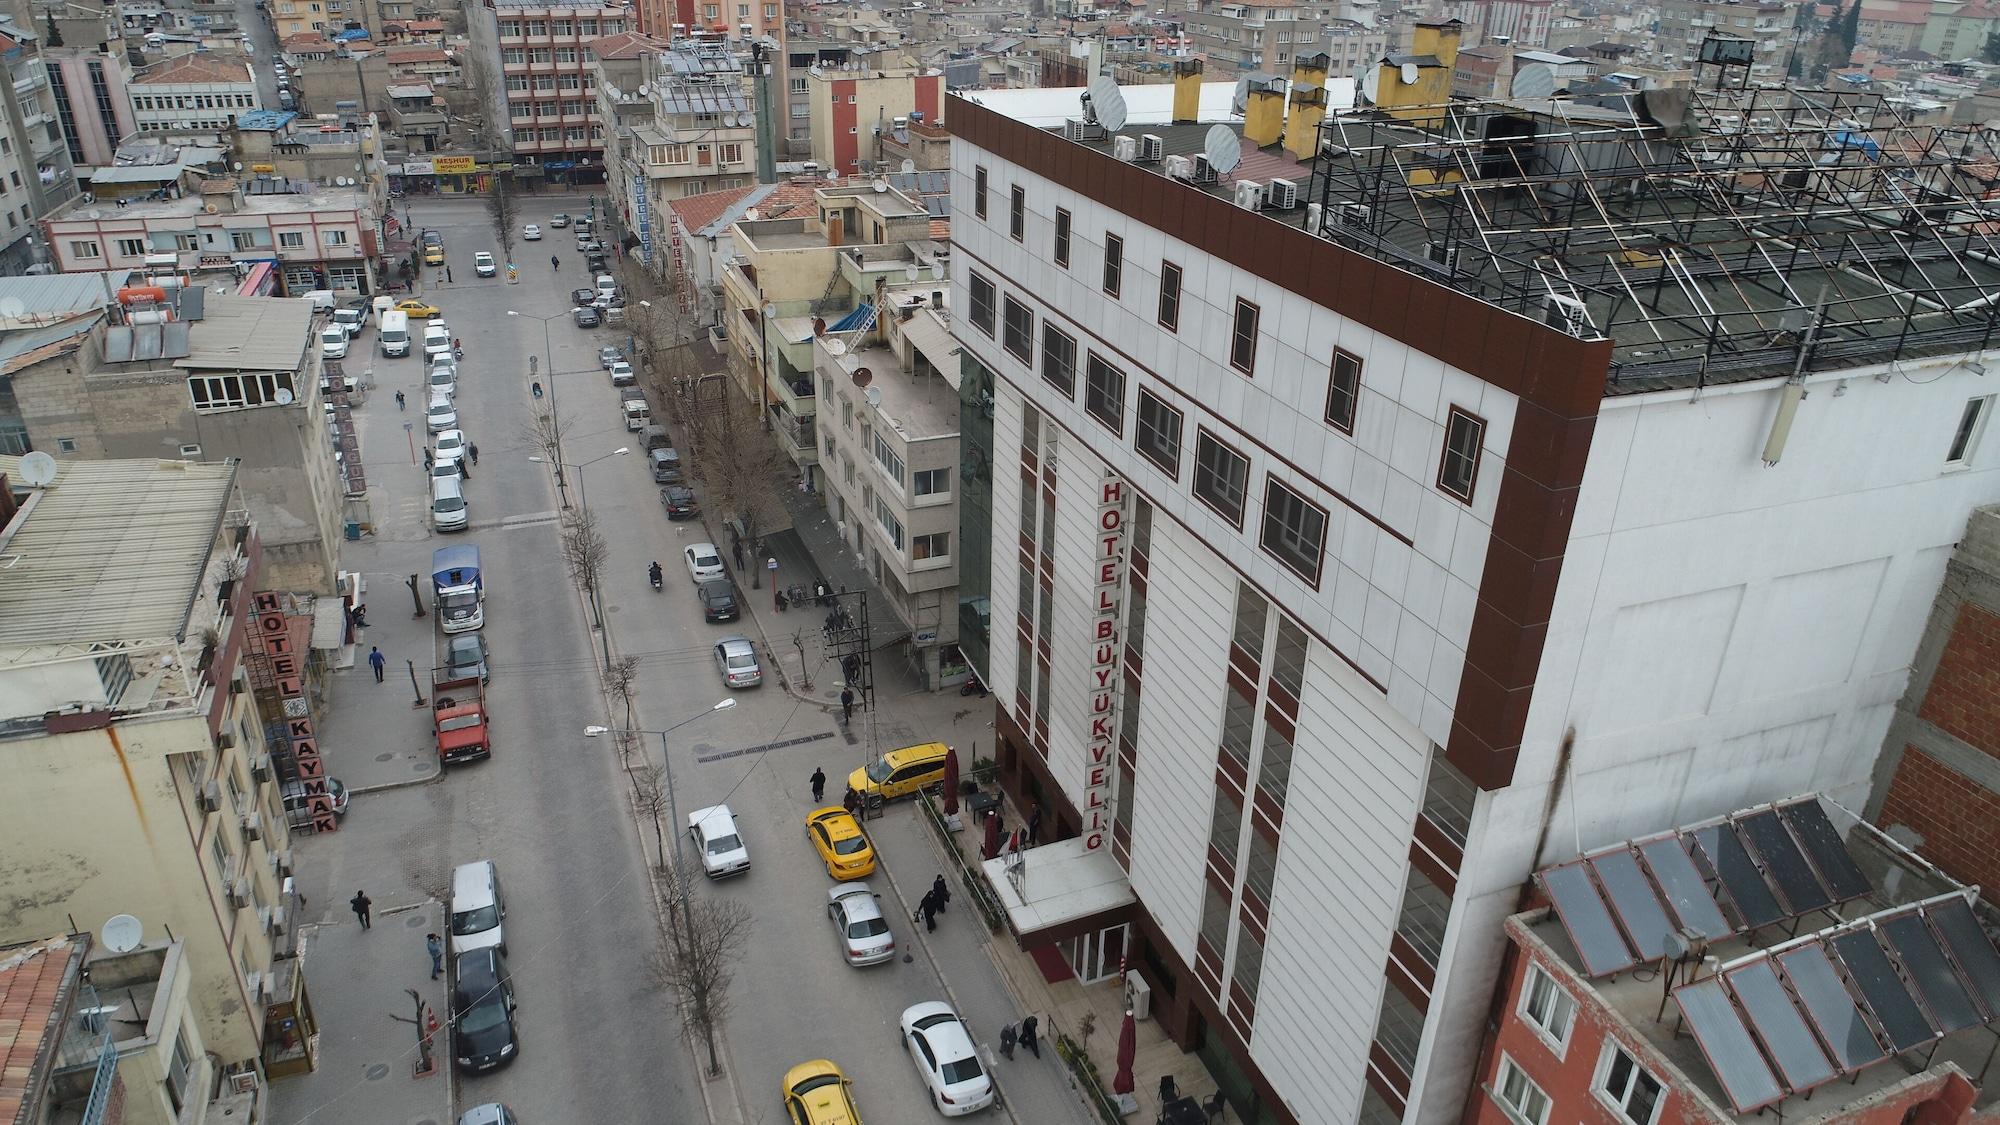 Buyuk Velic Hotel Gaziantep Extérieur photo